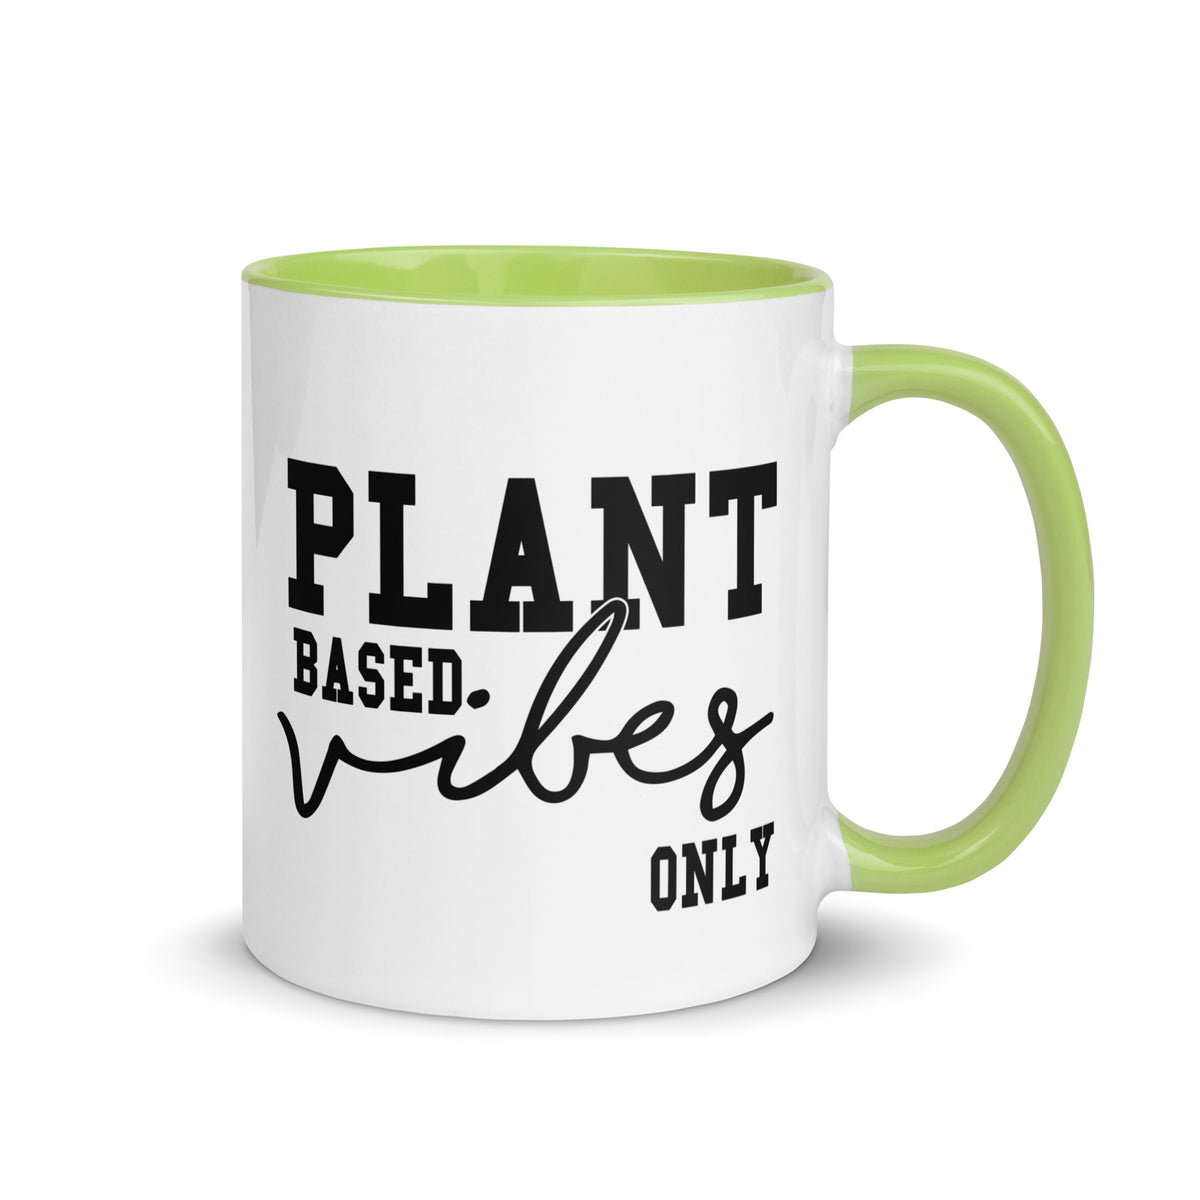 PLANT BASED VIBES Mug with Color Inside